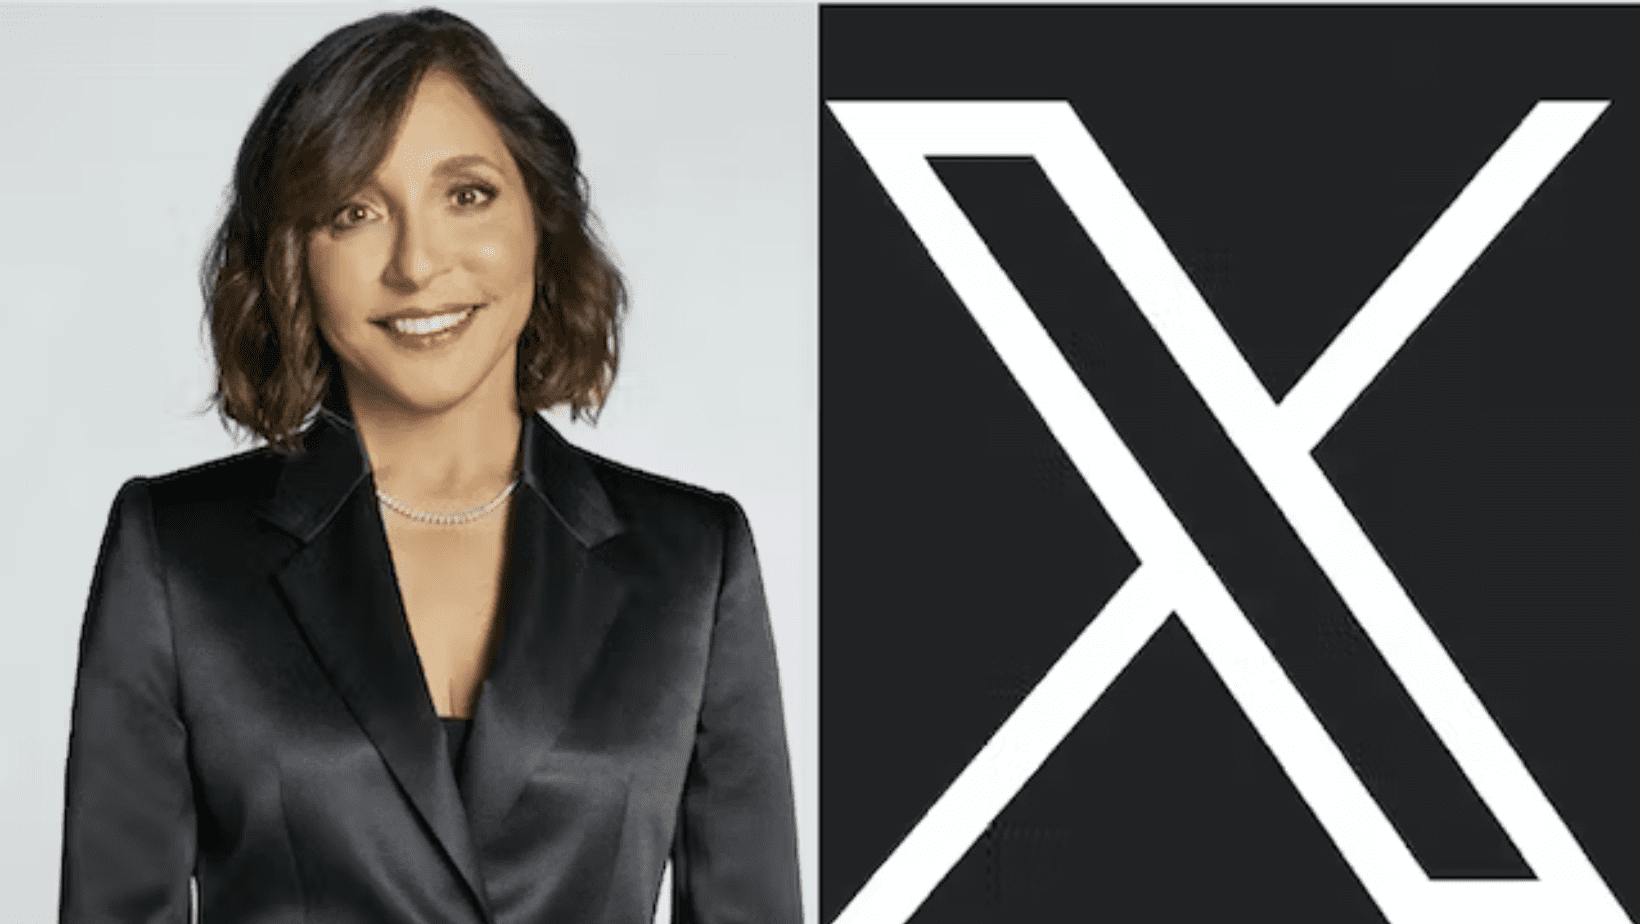 X CEO Yaccarino’s Leadership Reshuffle and Global Expansion